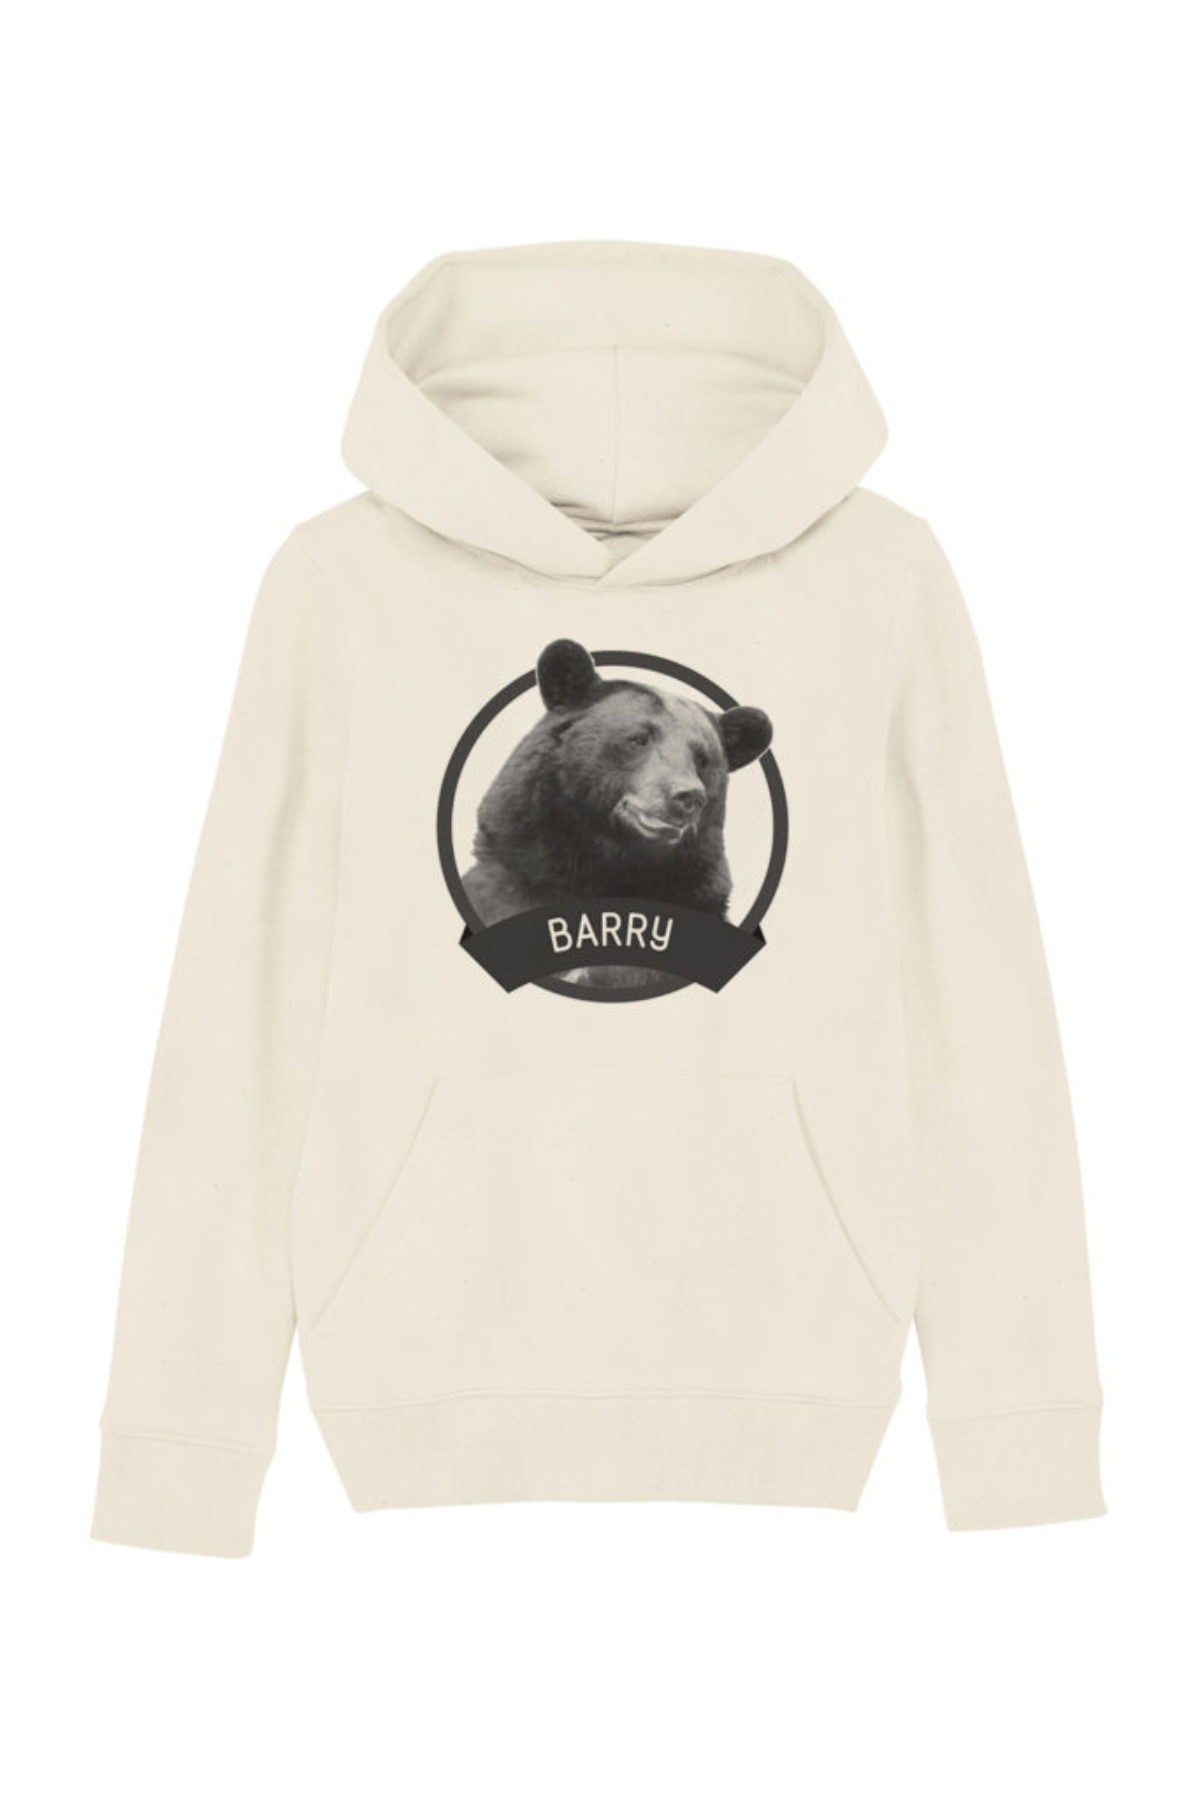 Sweatshirt capuche enfant - Barry